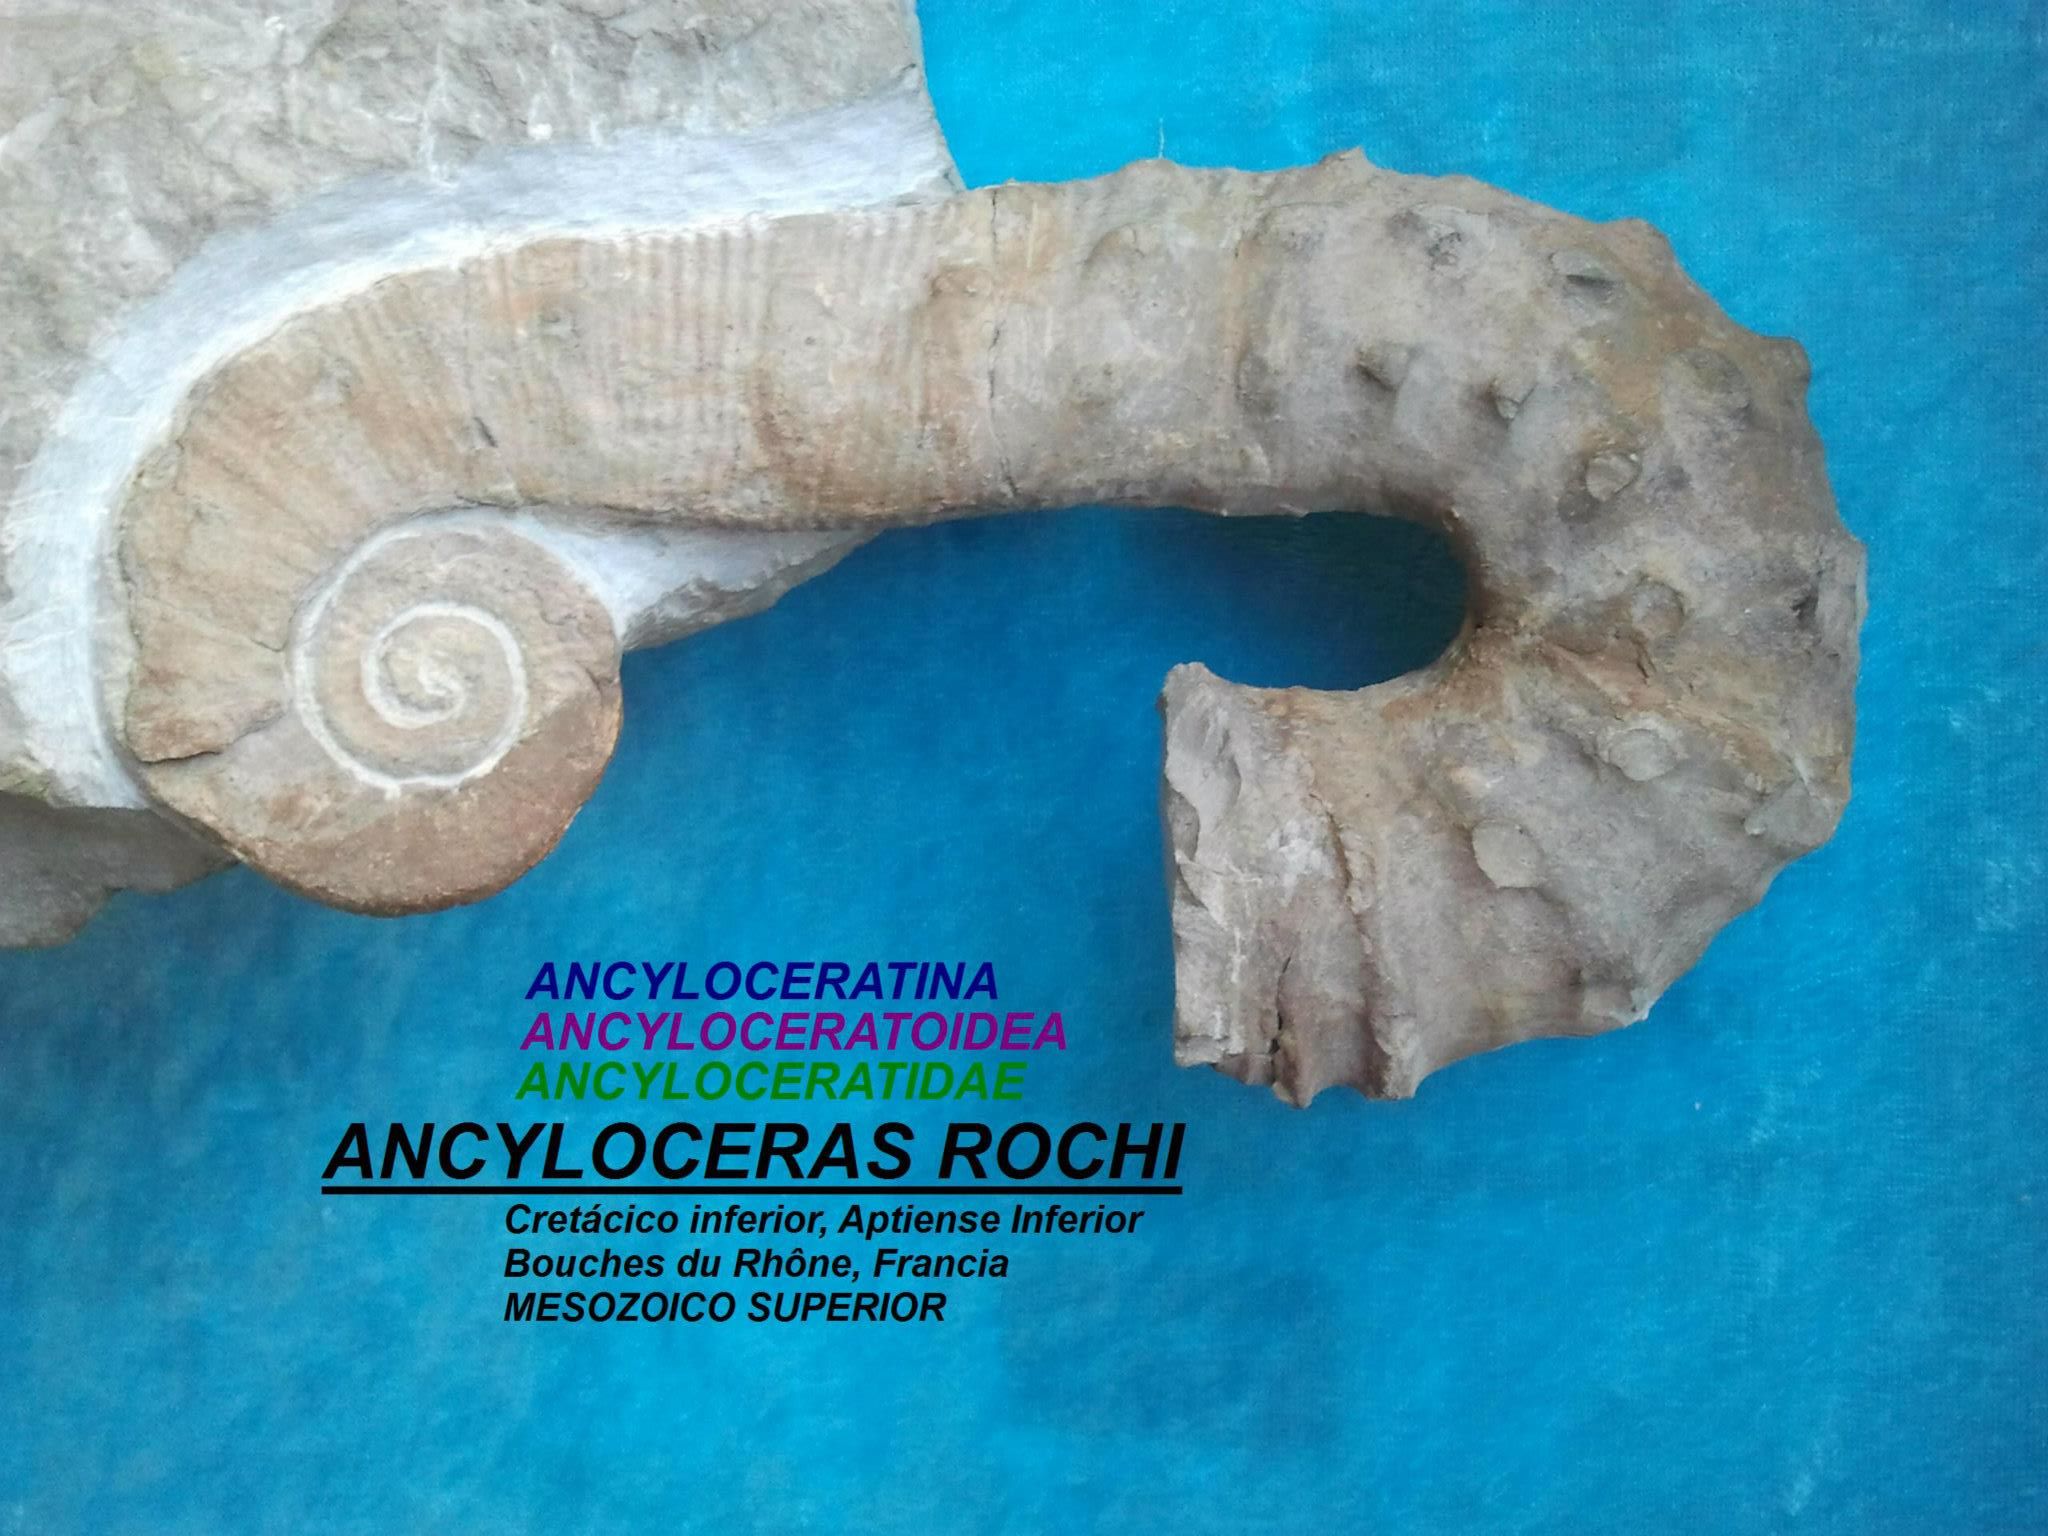 ANCYLOCERAS ROCHI